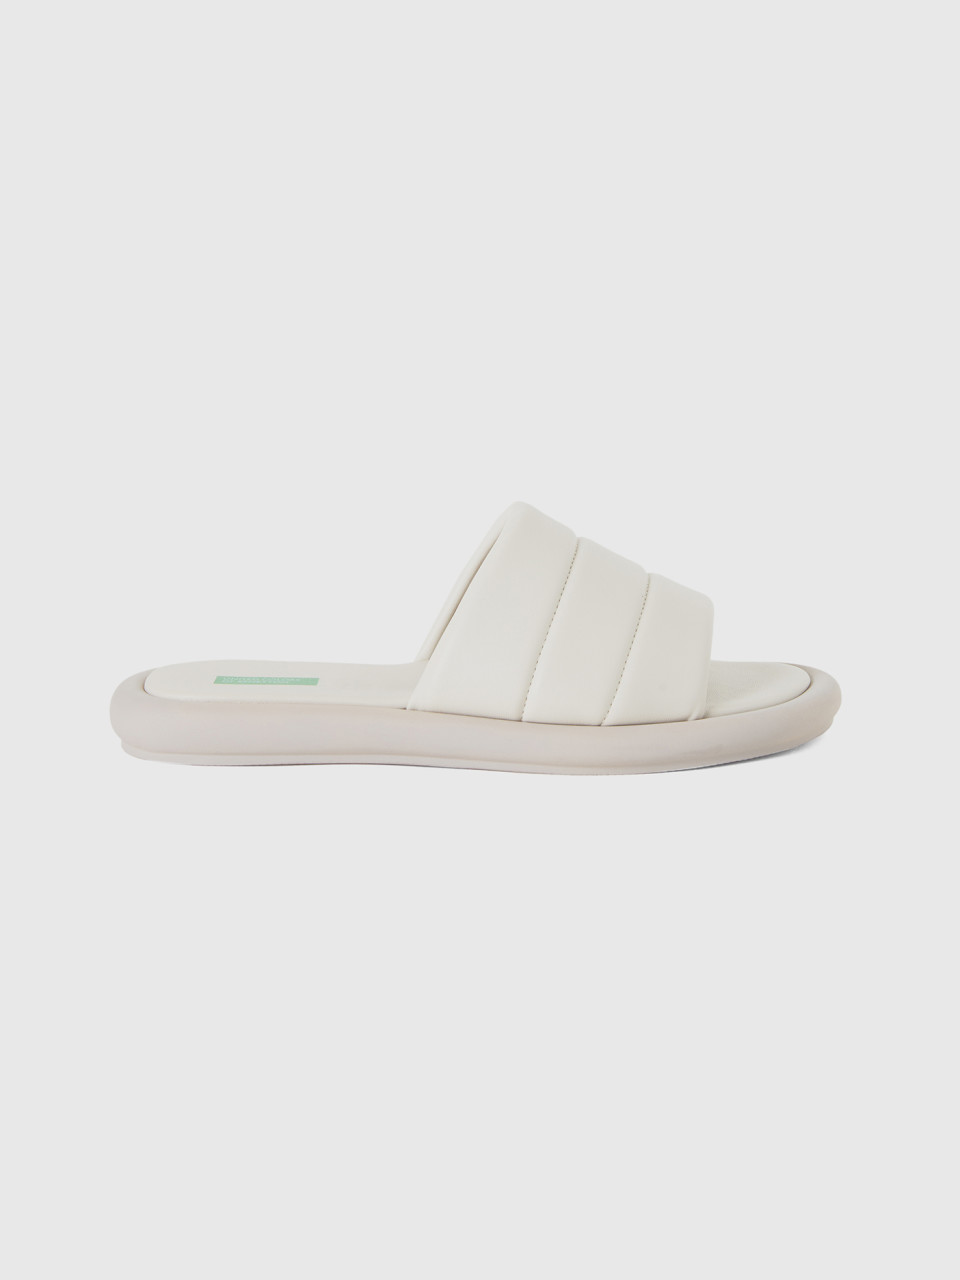 Benetton, White Open-toe Sandals,5, White